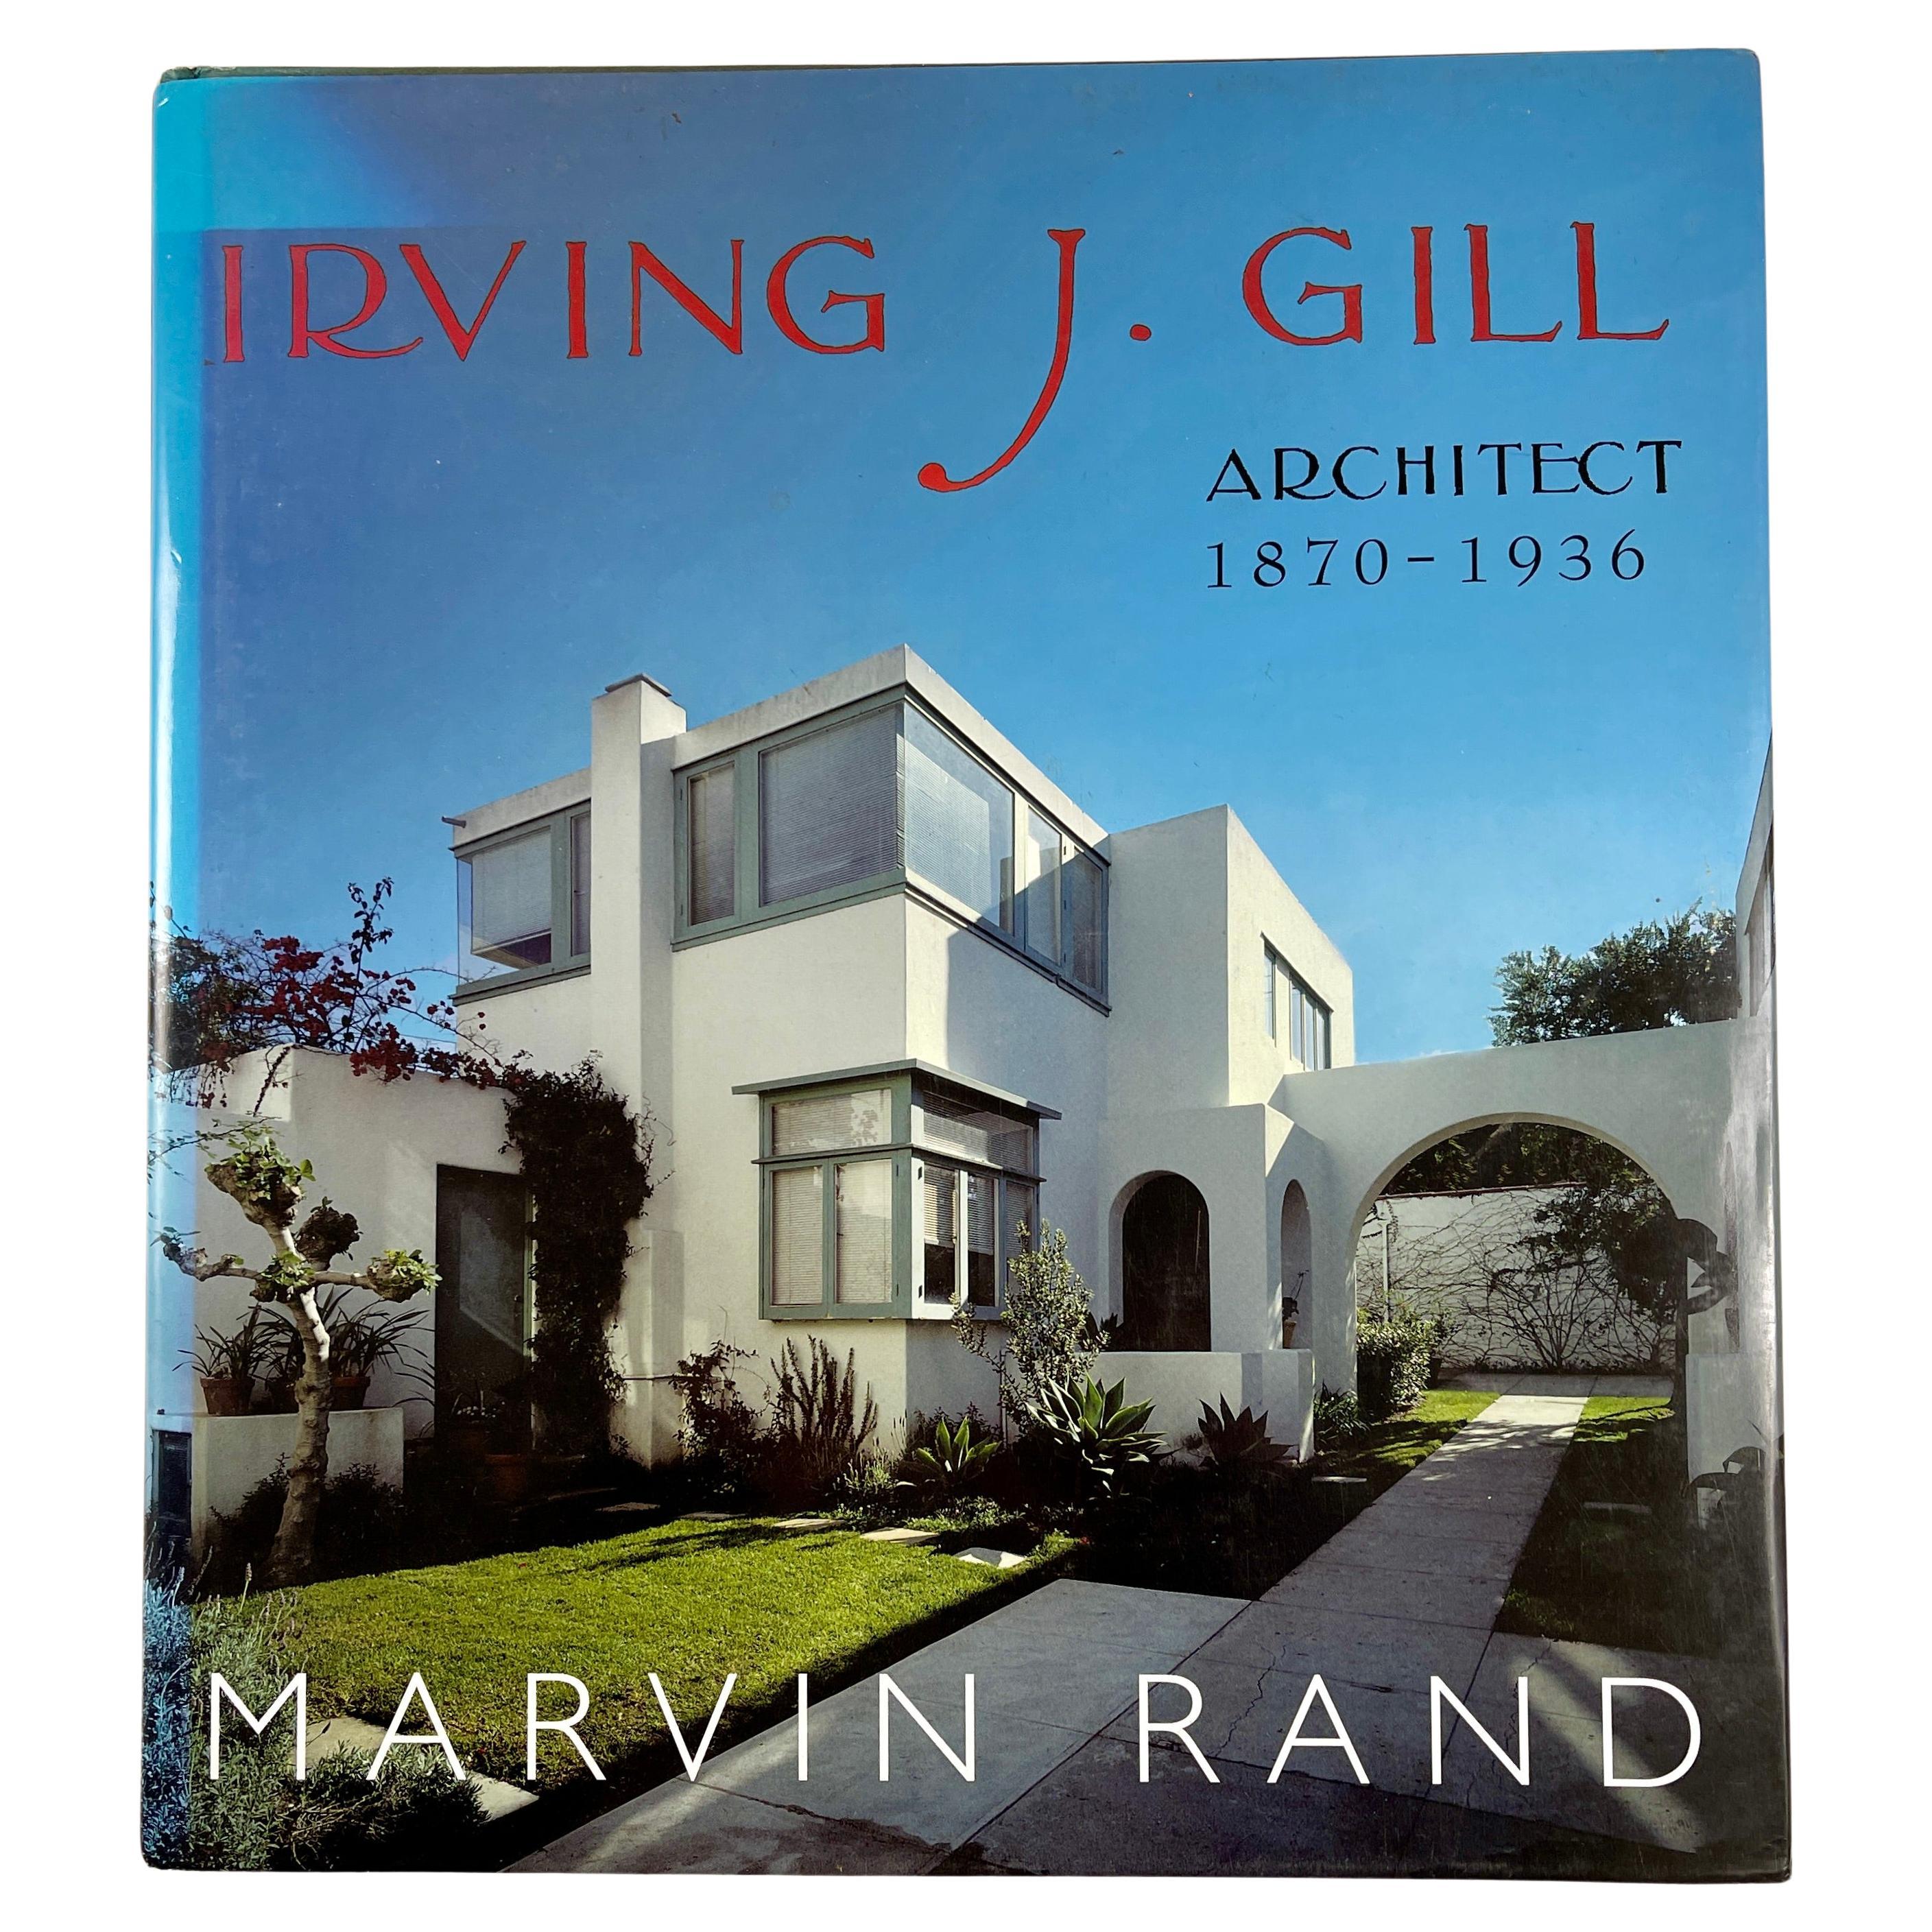 Irving J. Gill: Architect, California Architecture, Hardcoverbuch, 2006 im Angebot